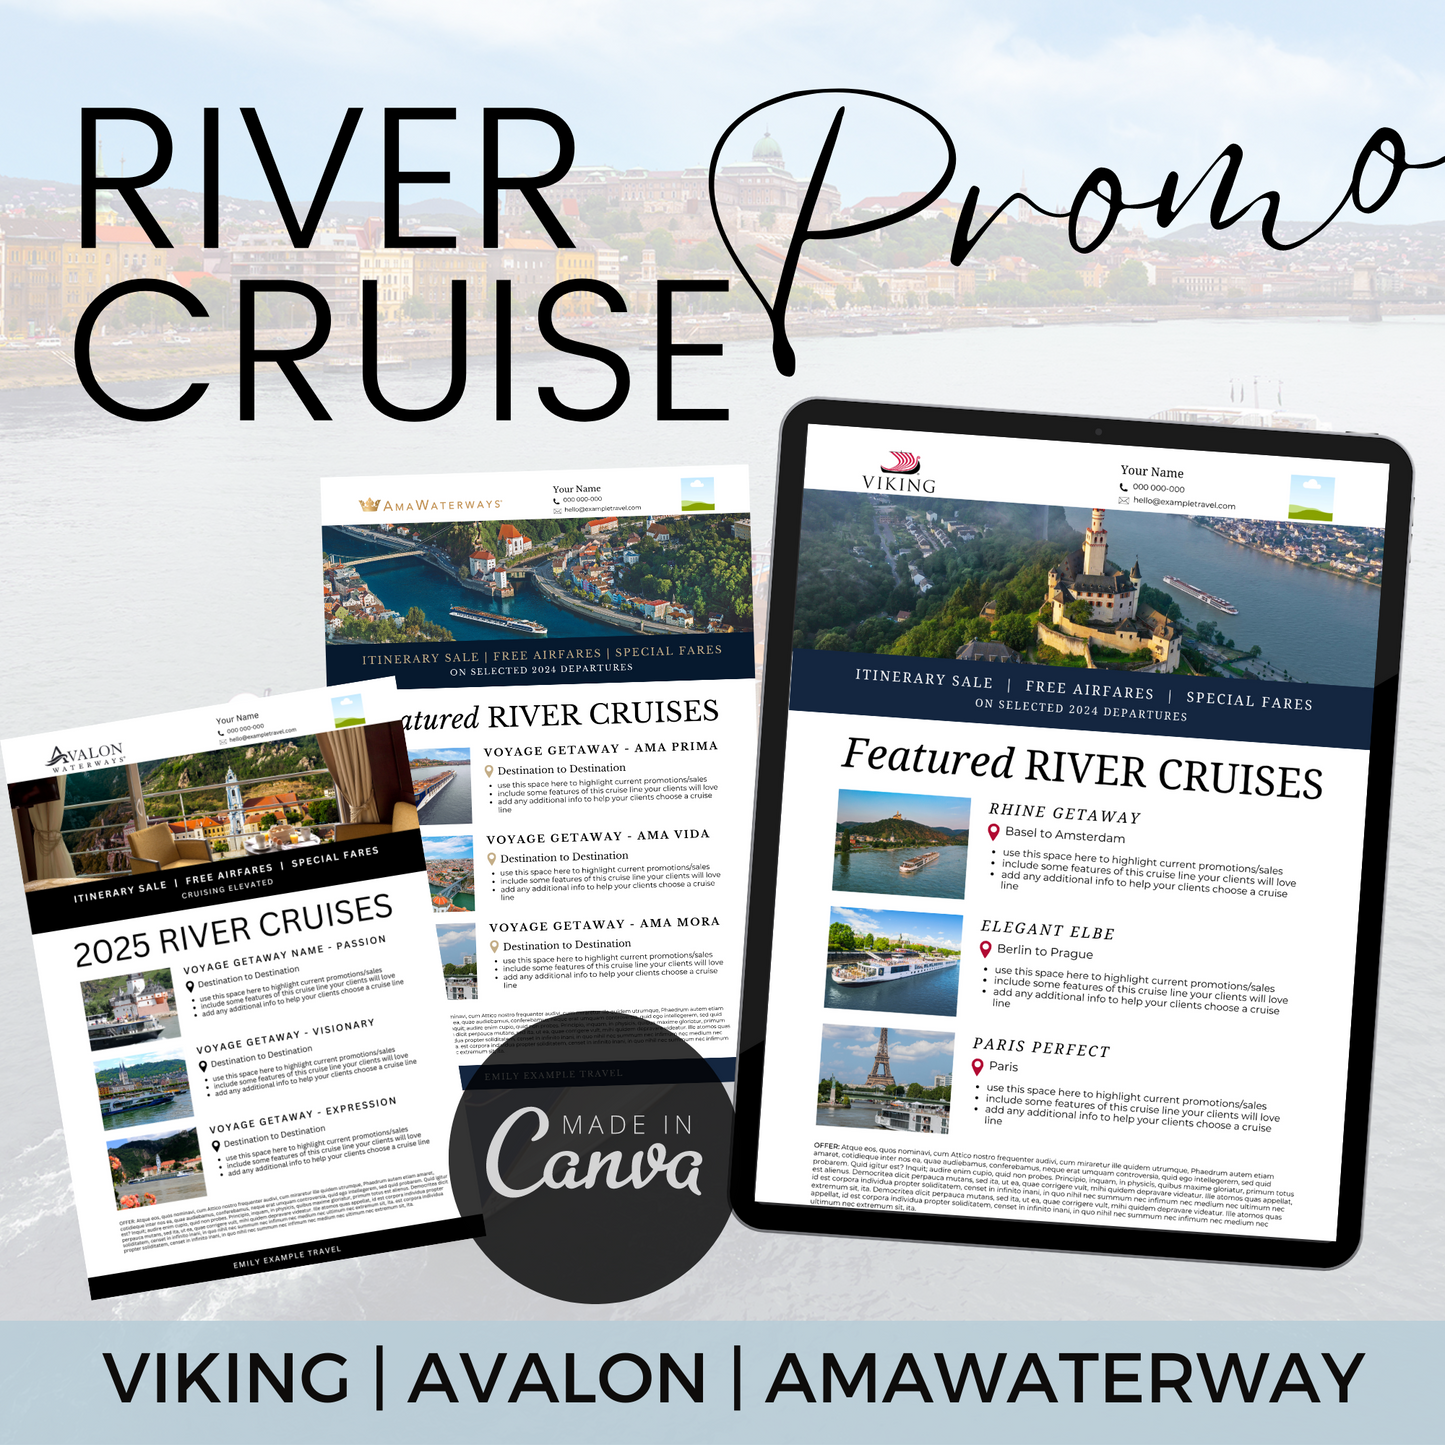 River Cruise Promo Flyer Canva Template | Viking River Cruises | Avalon Waterways | AmaWaterways